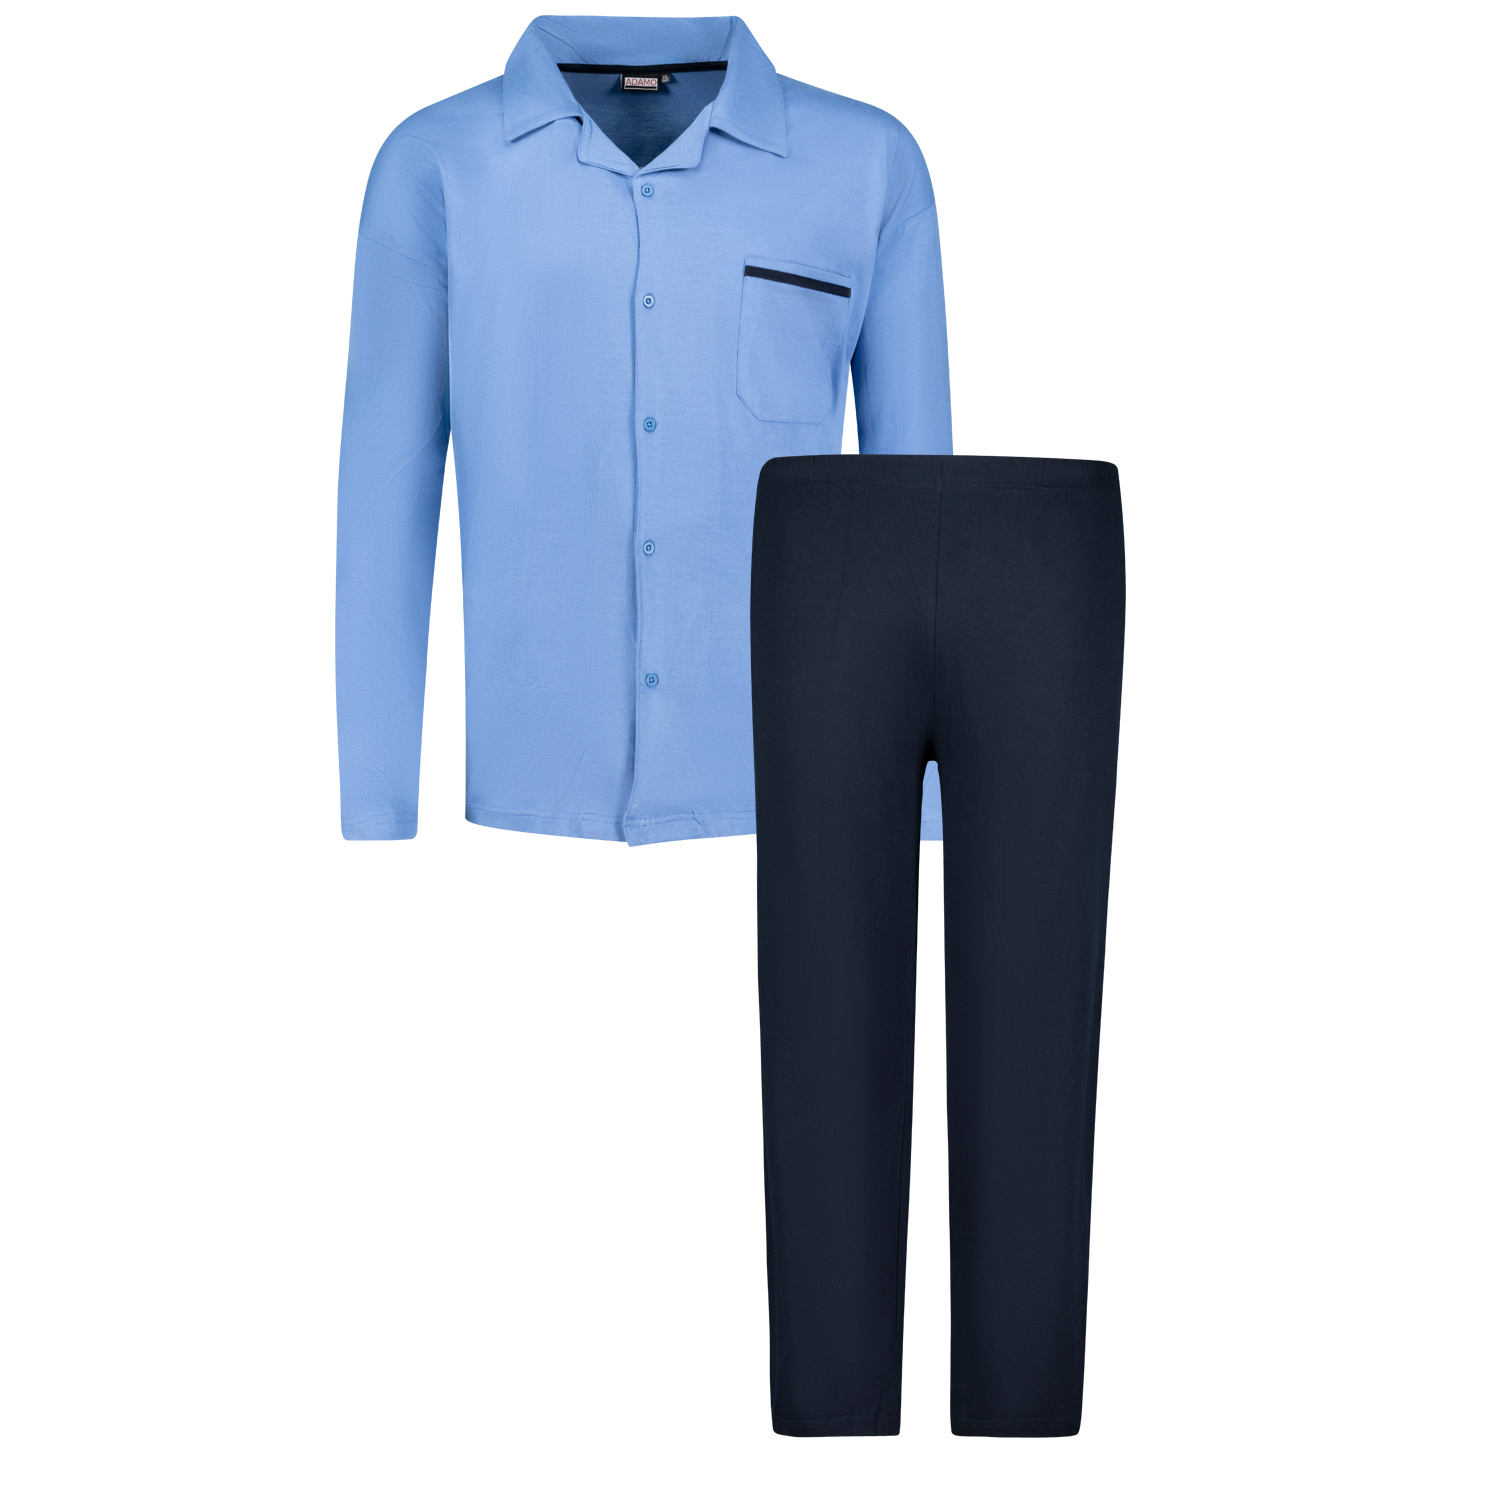 Long pyjama "Benno" in light blue by ADAMO up to oversize 10XL